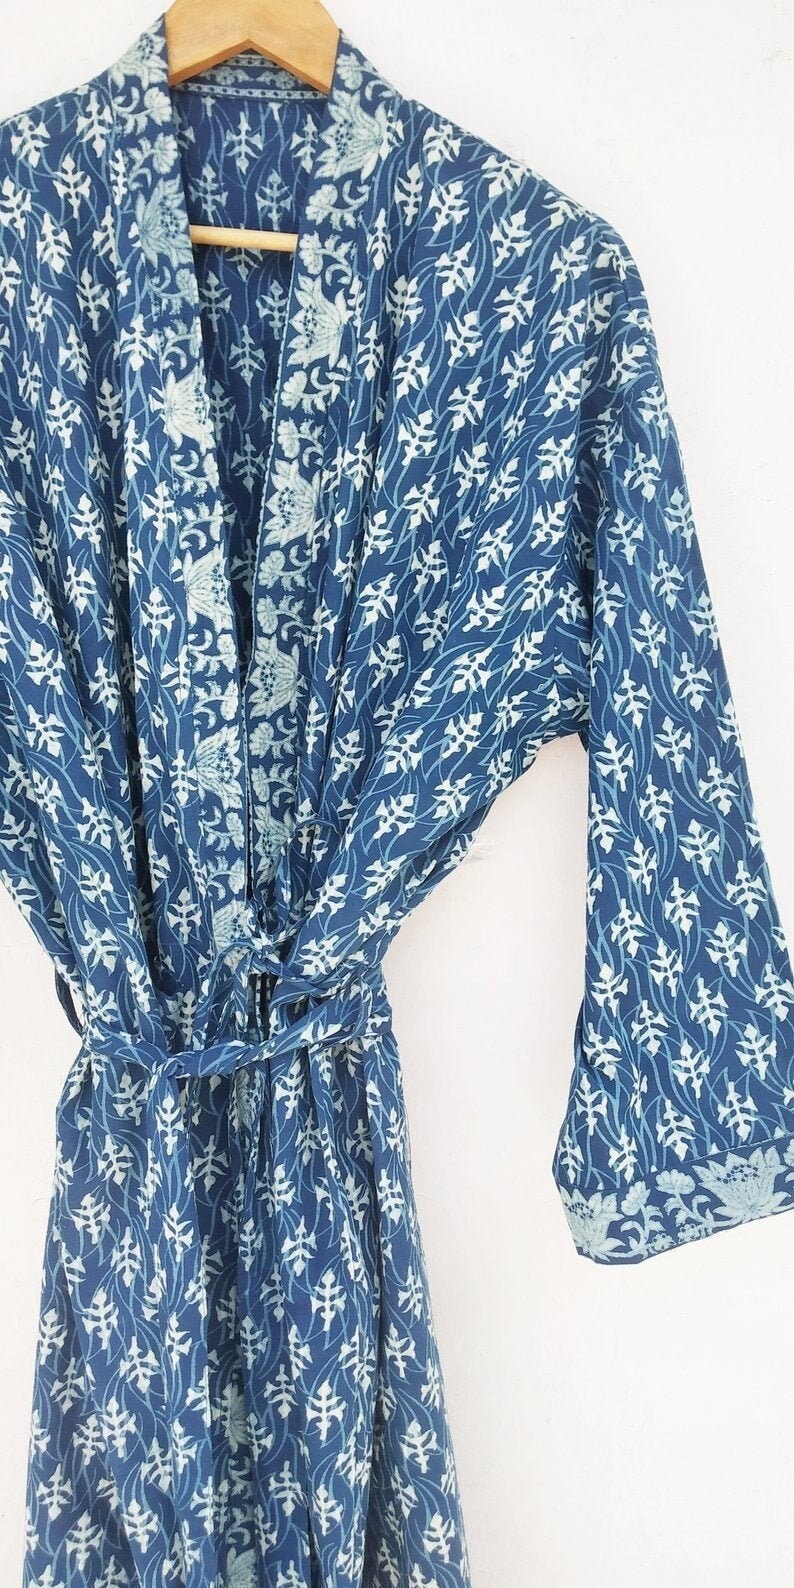 Indigo Cotton Kimono Robes for Women Indian Dressing Gown Unisex Blockprint Beach Cover ups Bridesmaid Gifts image 1